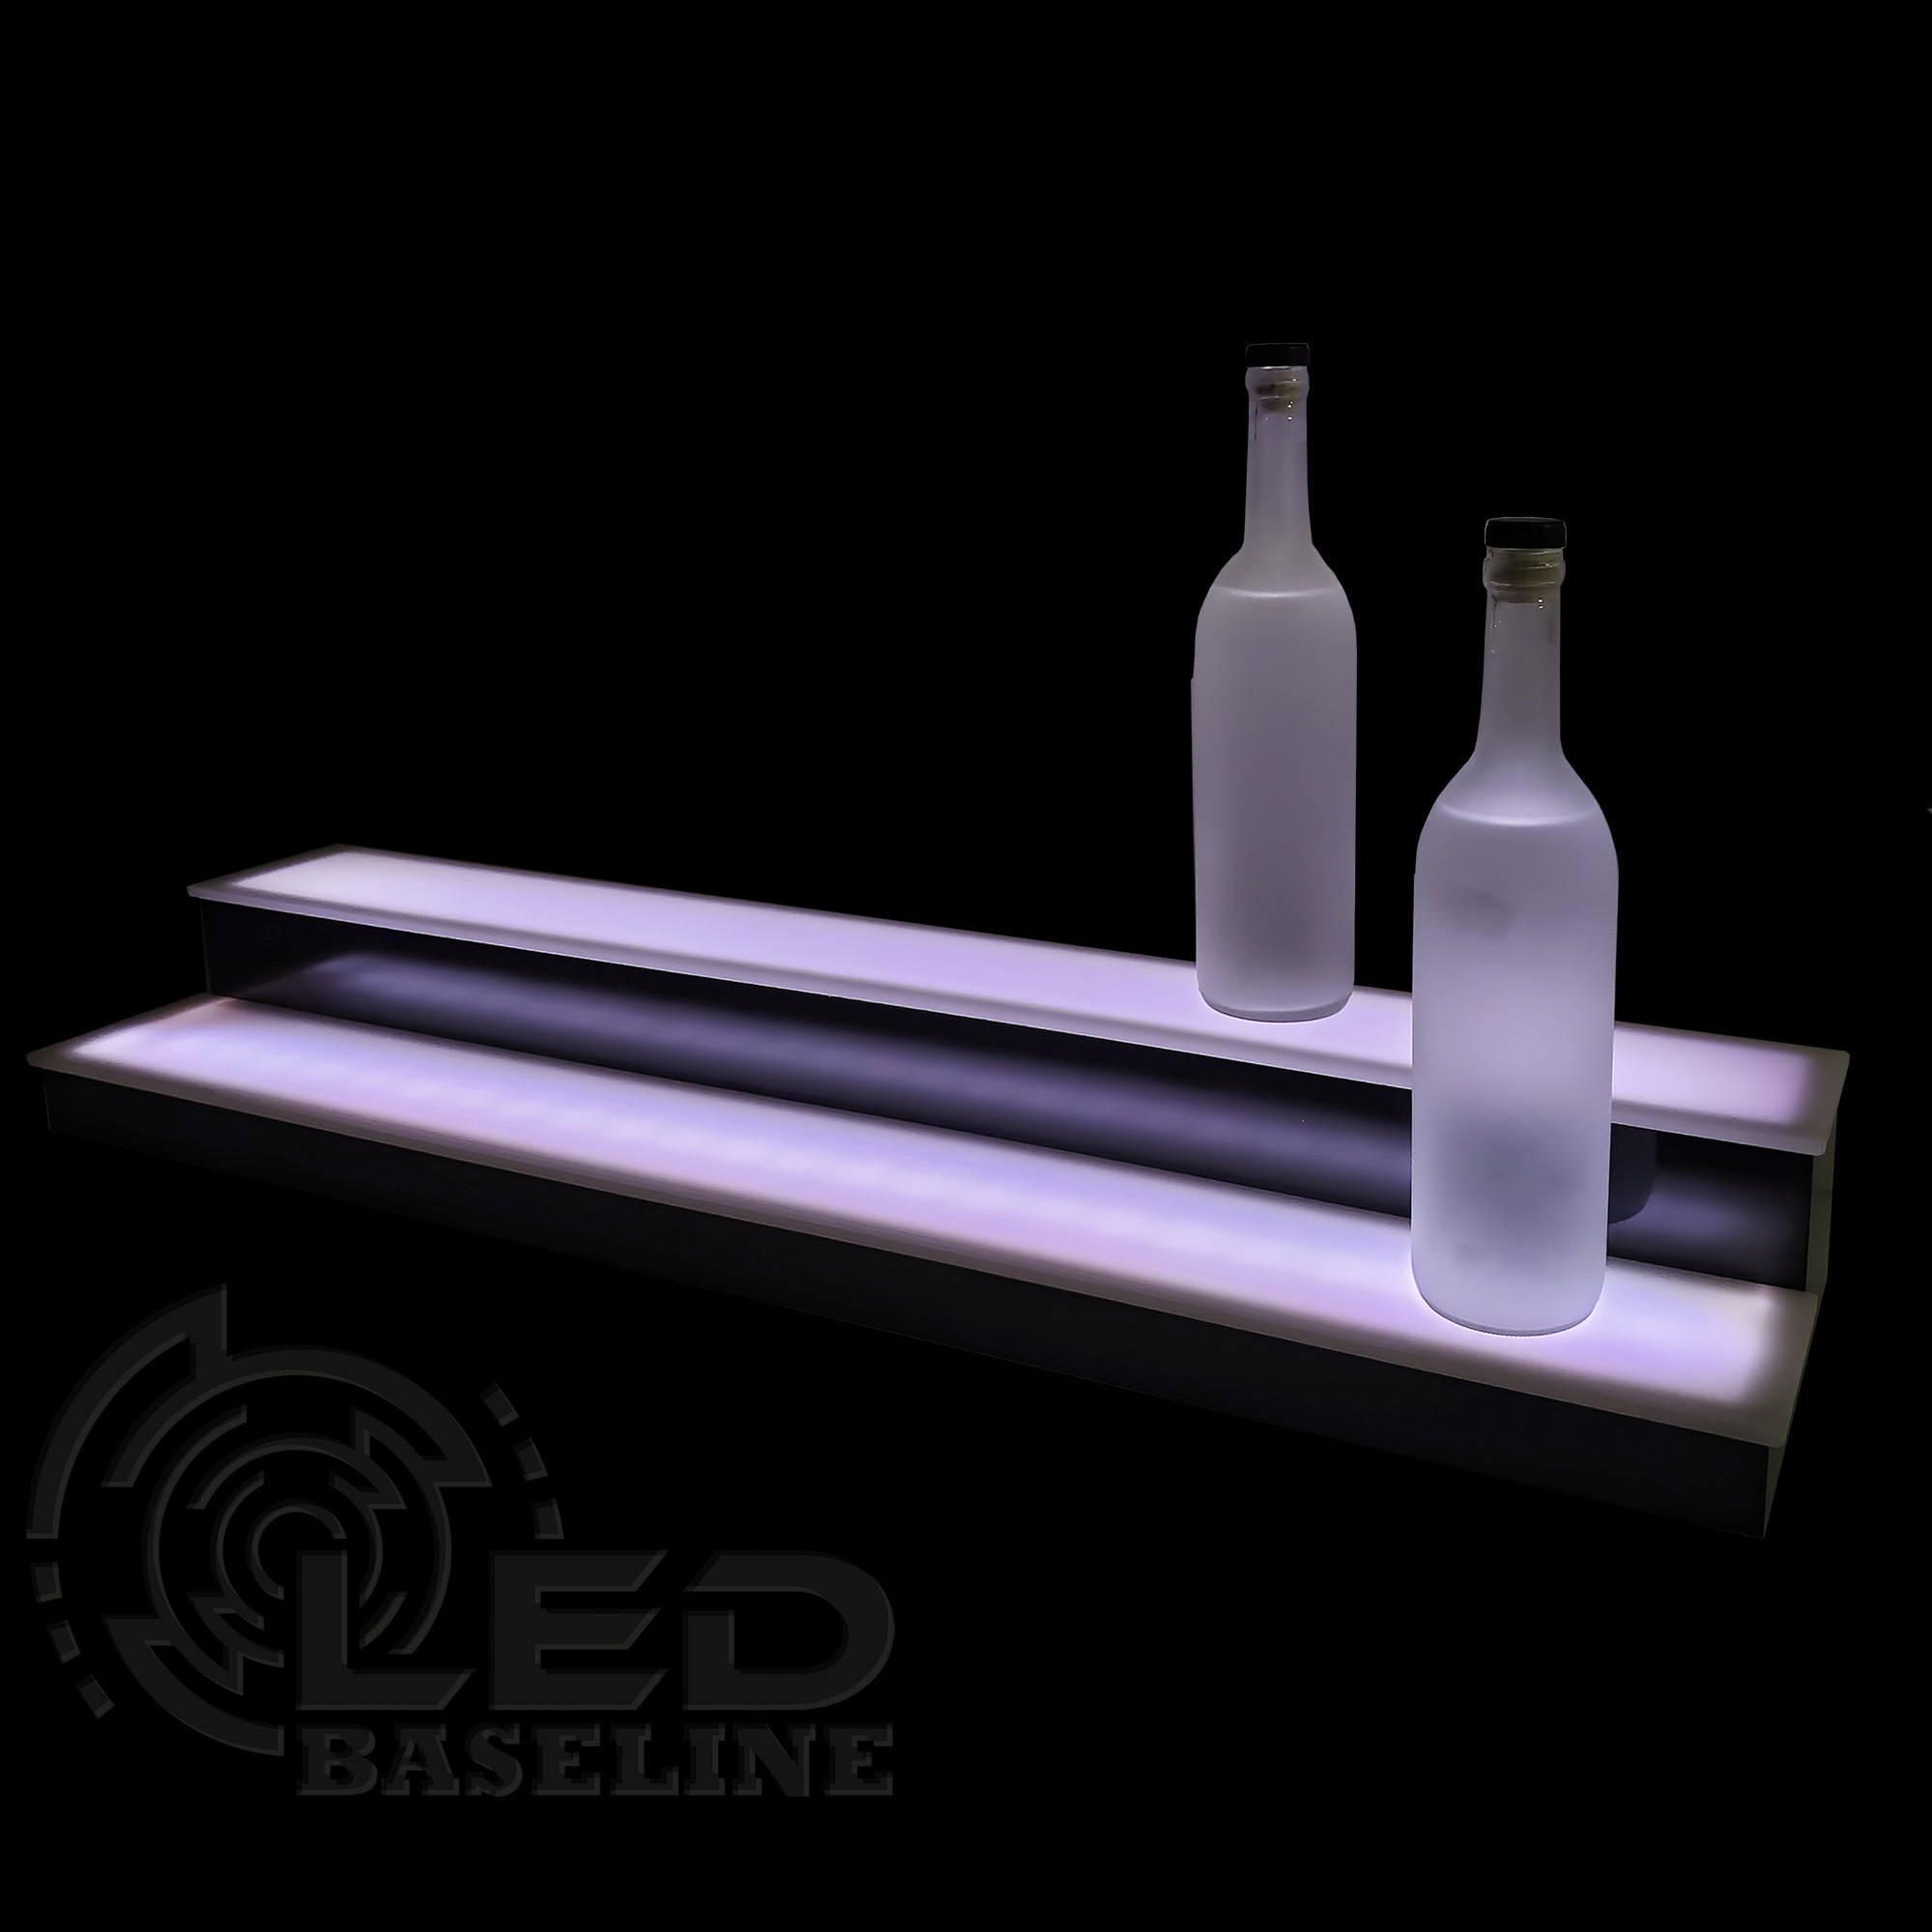 48 3 Step Tier LED Lighted Shelves Illuminated Liquor Bottle Display Ship for sale online 